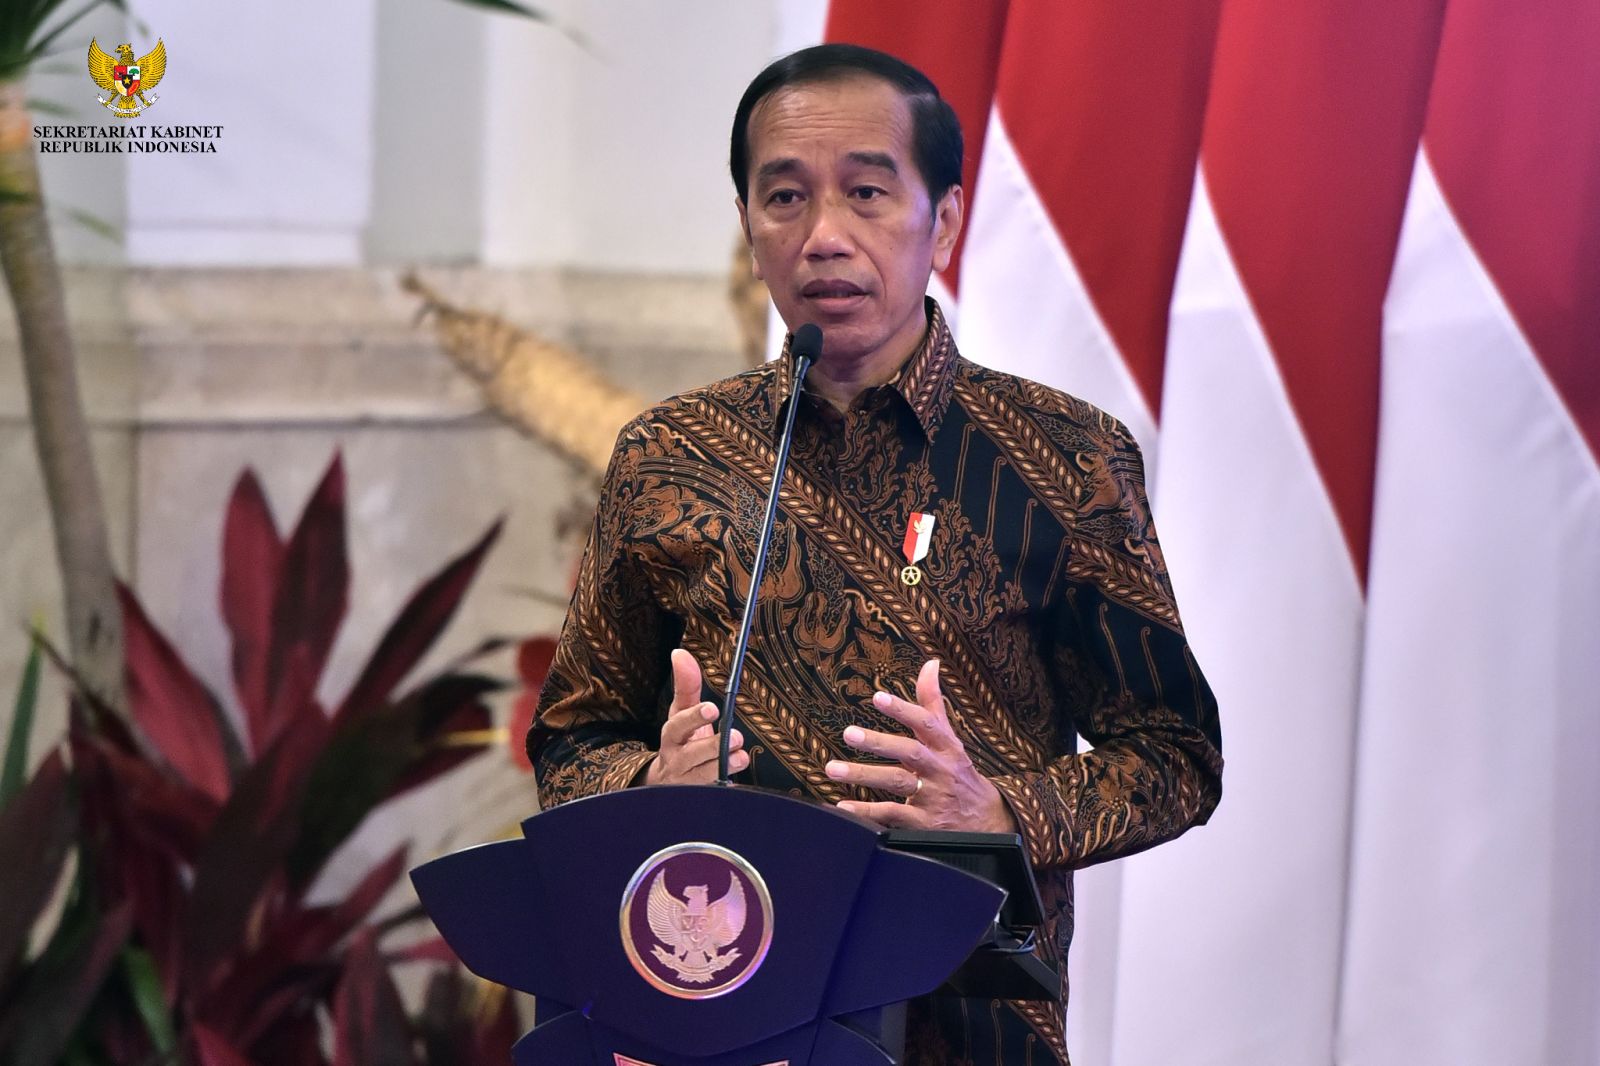 Kasus Ginjal Akut, Jokowi: Jangan Anggap Ini Masalah Kecil